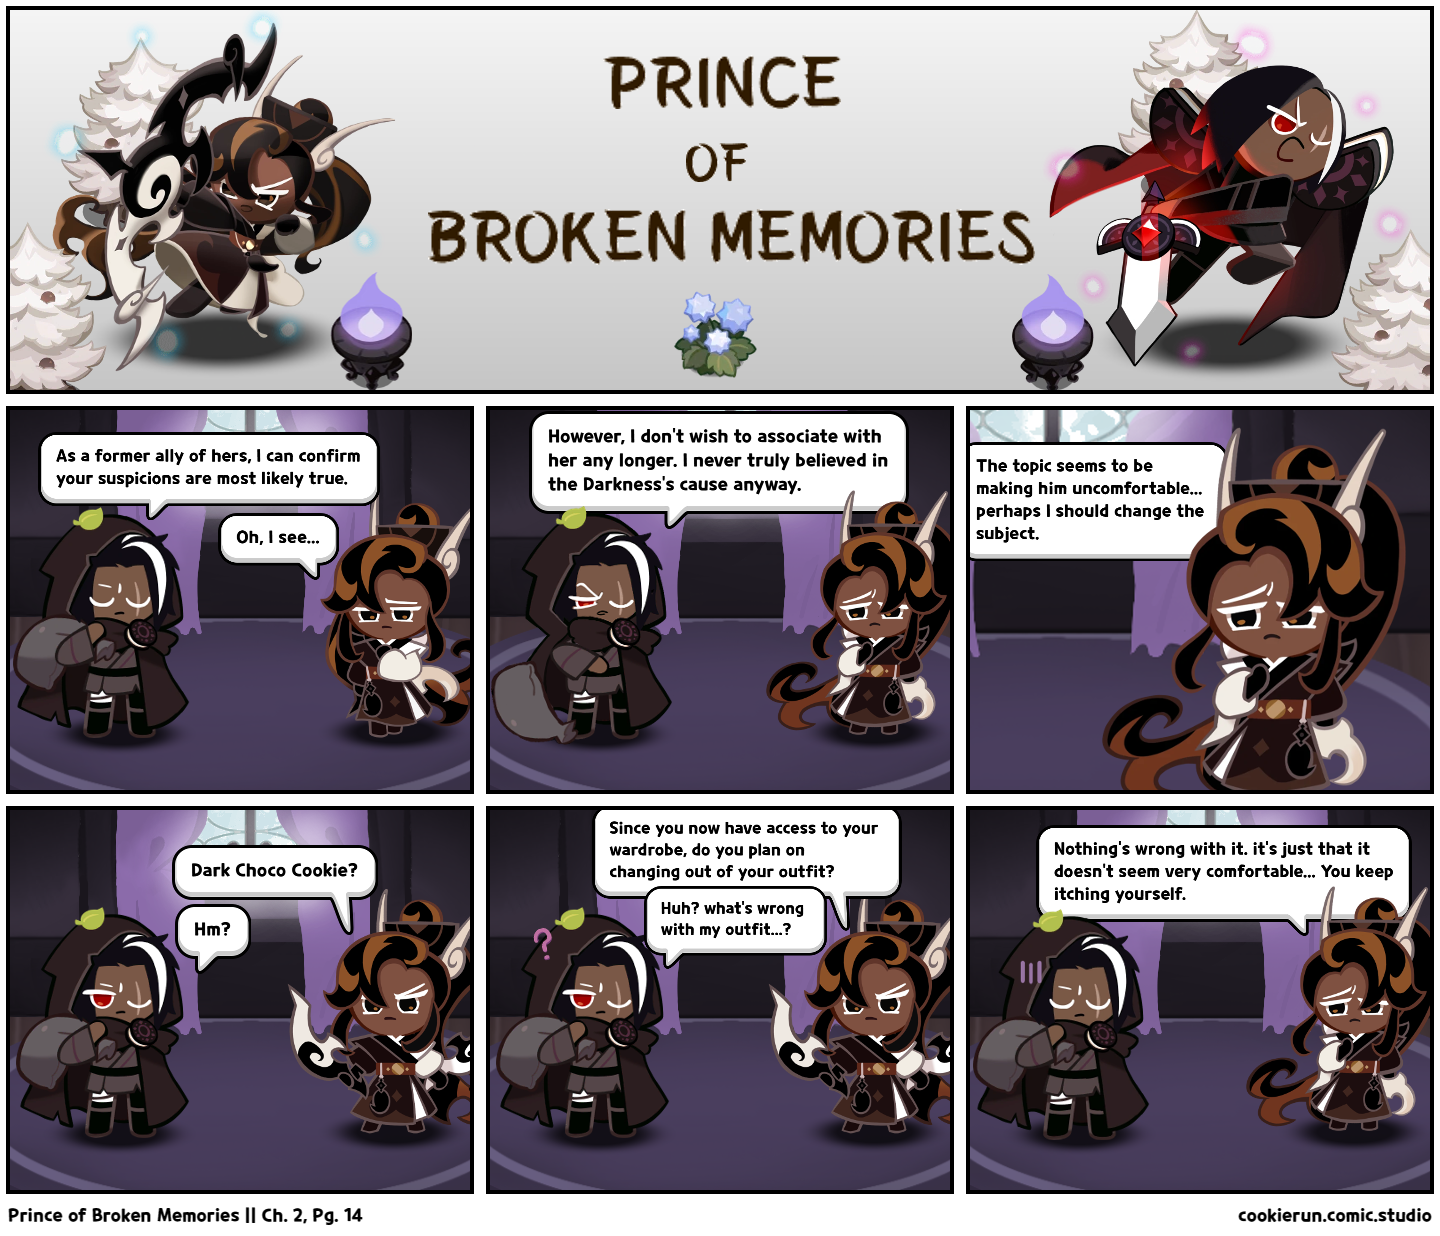 Prince of Broken Memories || Ch. 2, Pg. 14